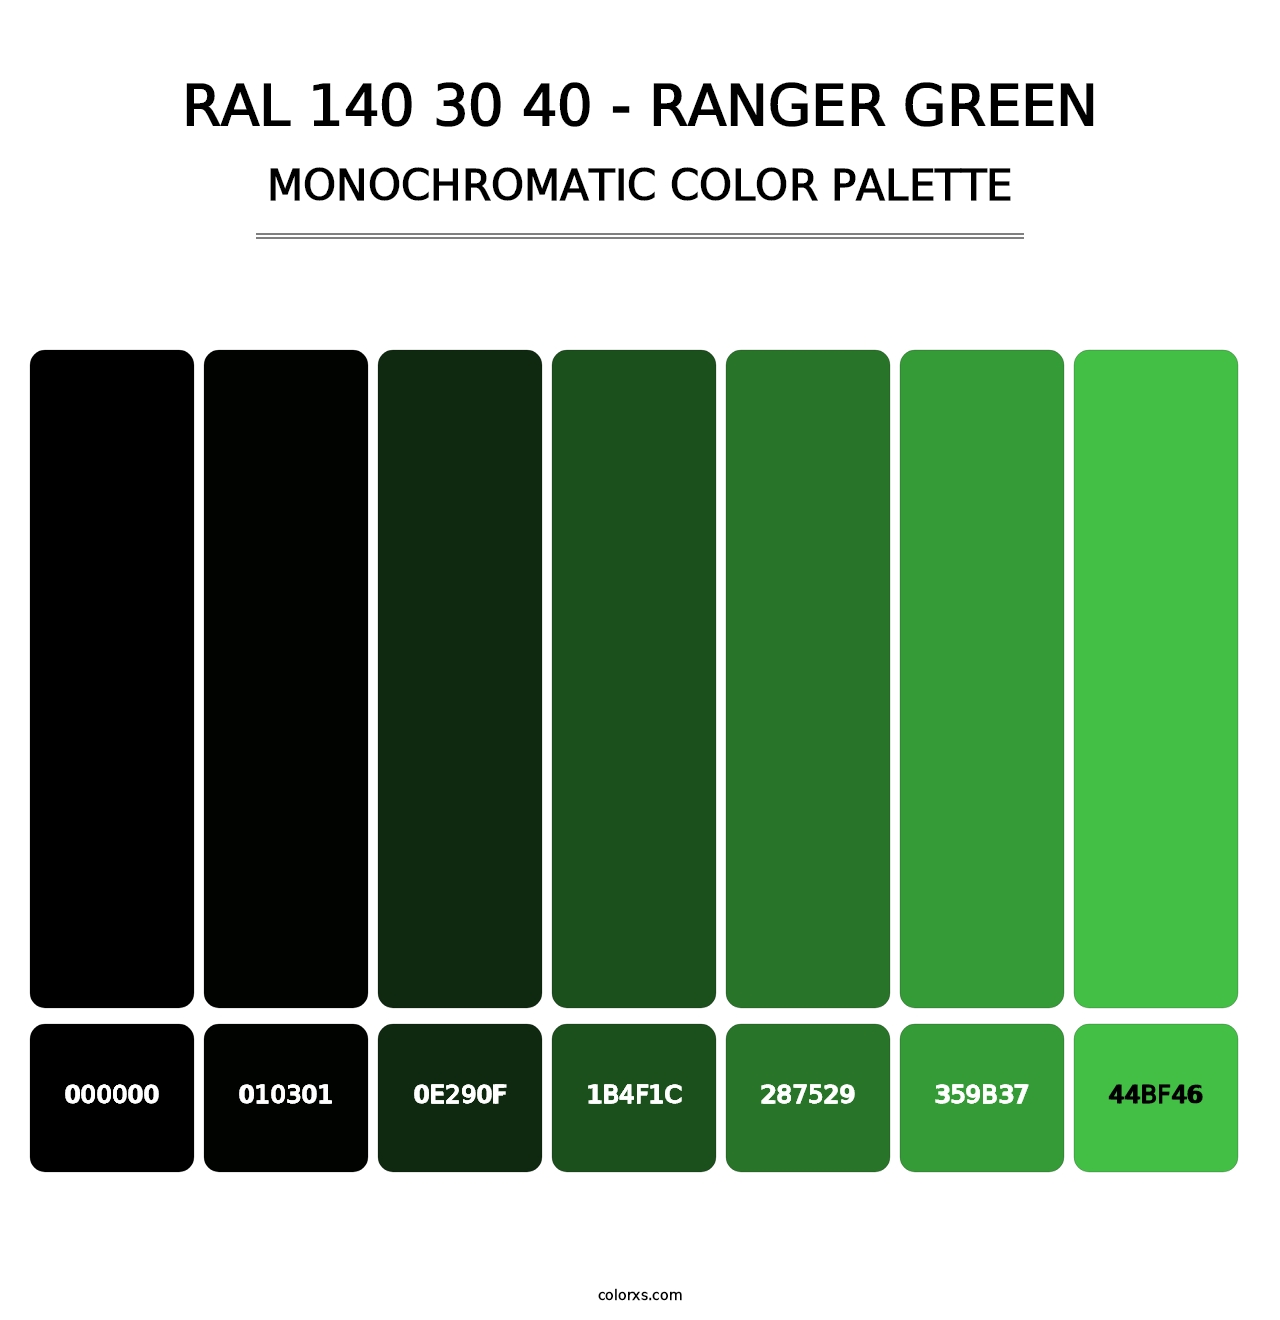 RAL 140 30 40 - Ranger Green - Monochromatic Color Palette